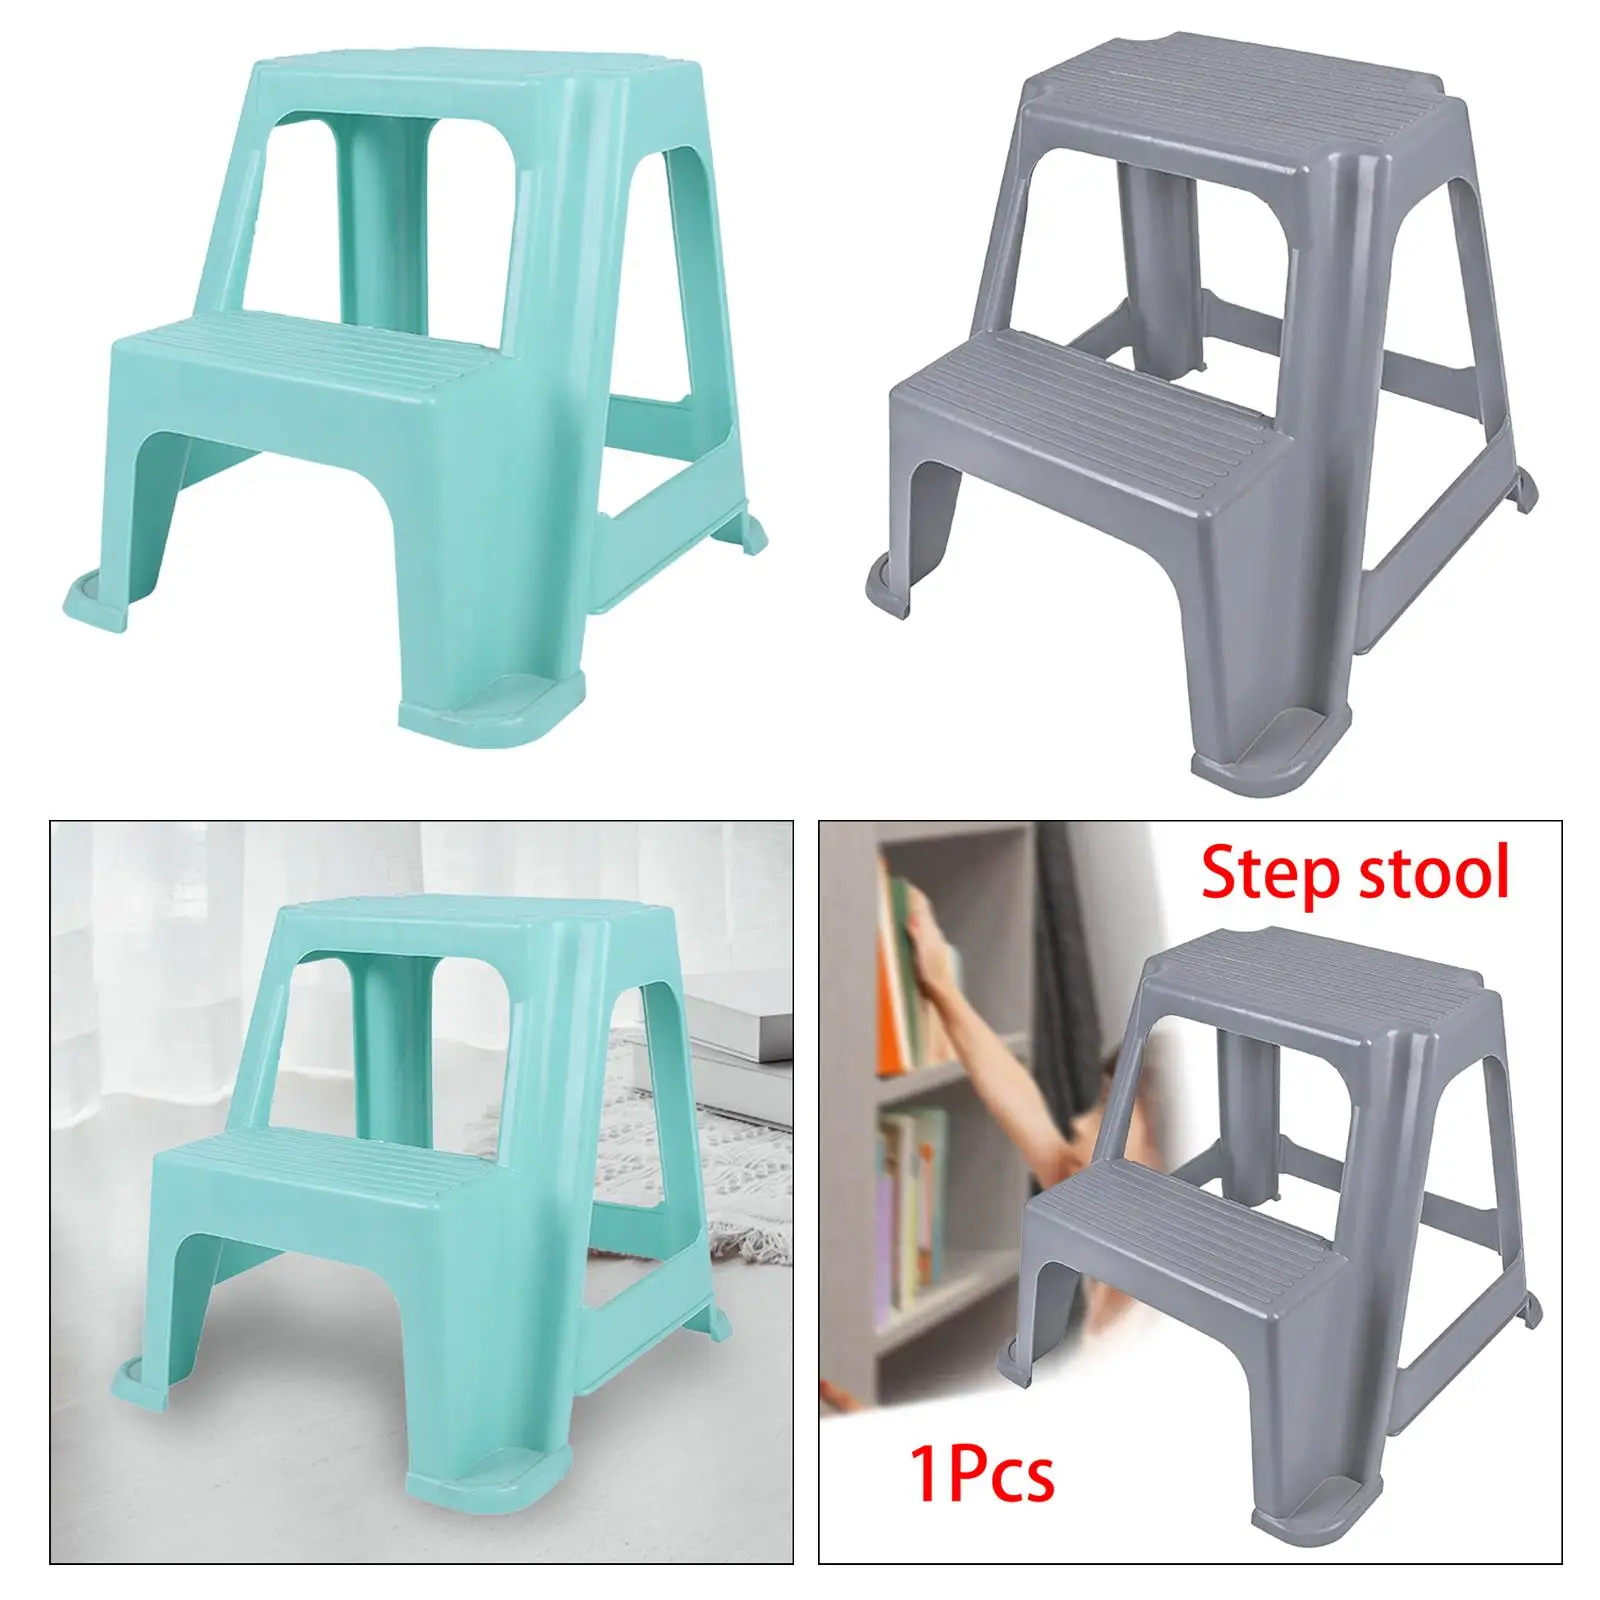 2 Step Stool Anti Slip Lightweight Stepping Stool Toilet Stool Two Step Stool Stepstool for Kids Seniors Adults Pets Bathroom